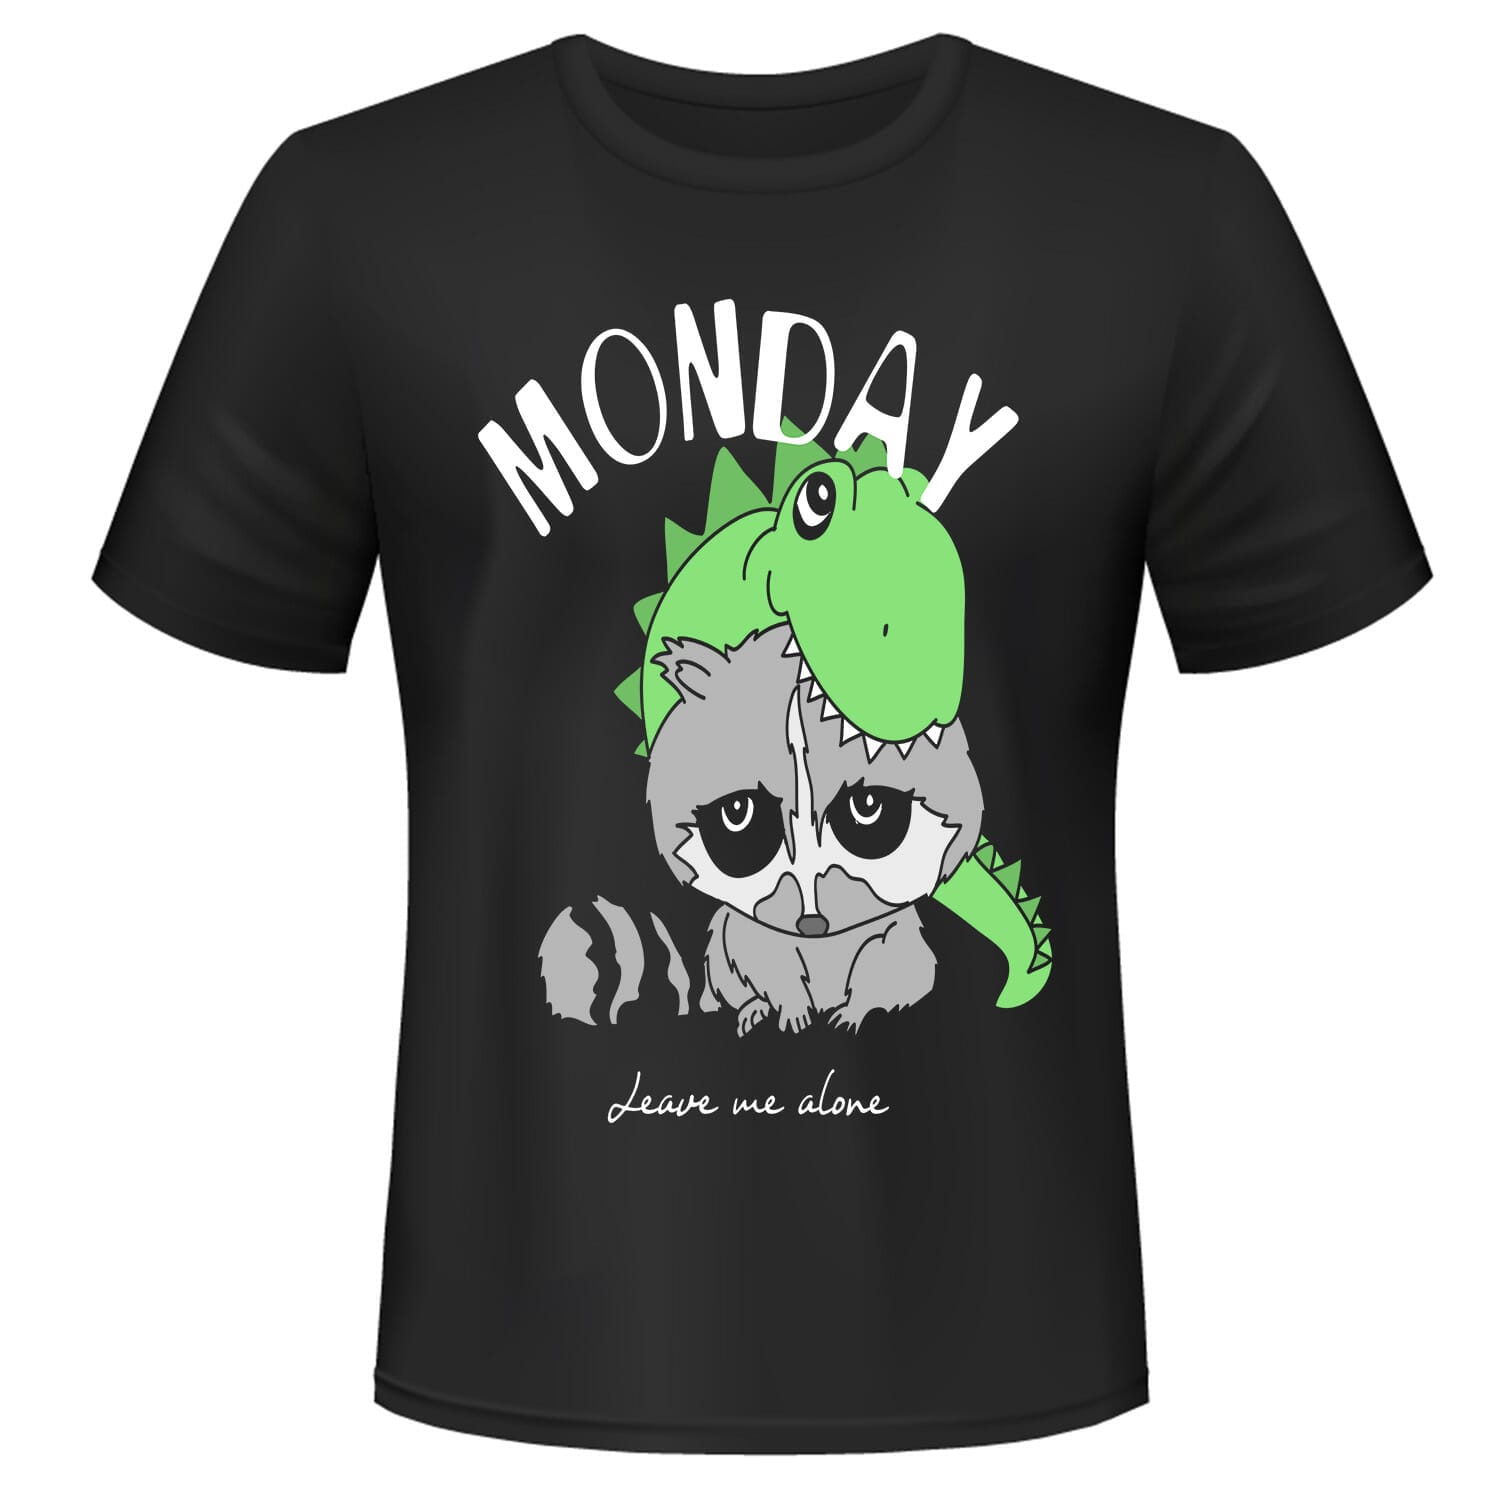 Monday leave me alone funny tshirt design